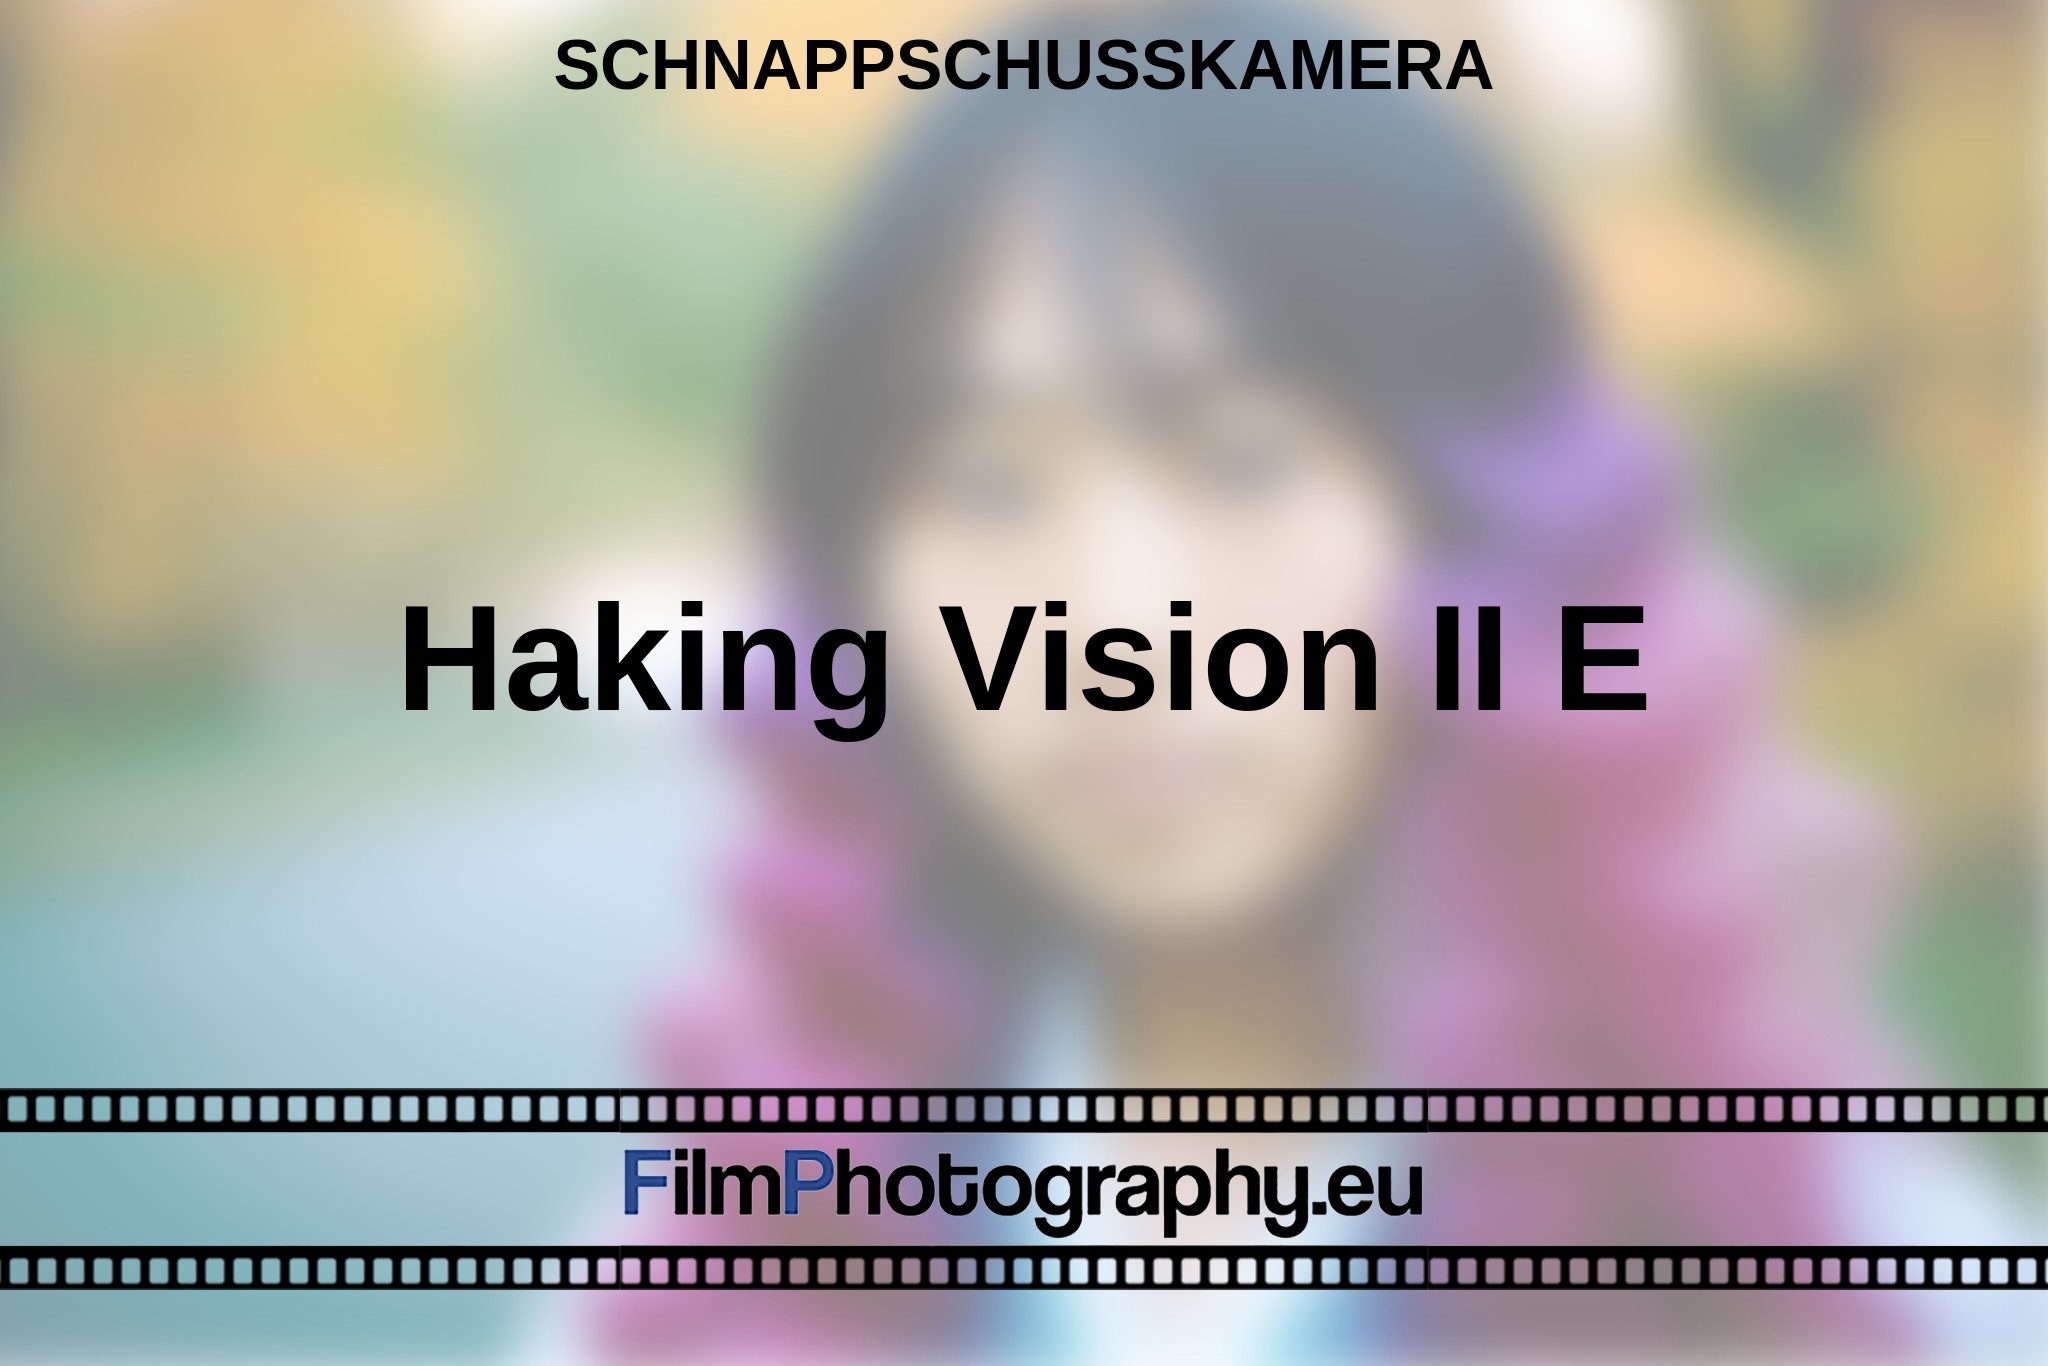 haking-vision-ii-e-schnappschusskamera-bnv.jpg